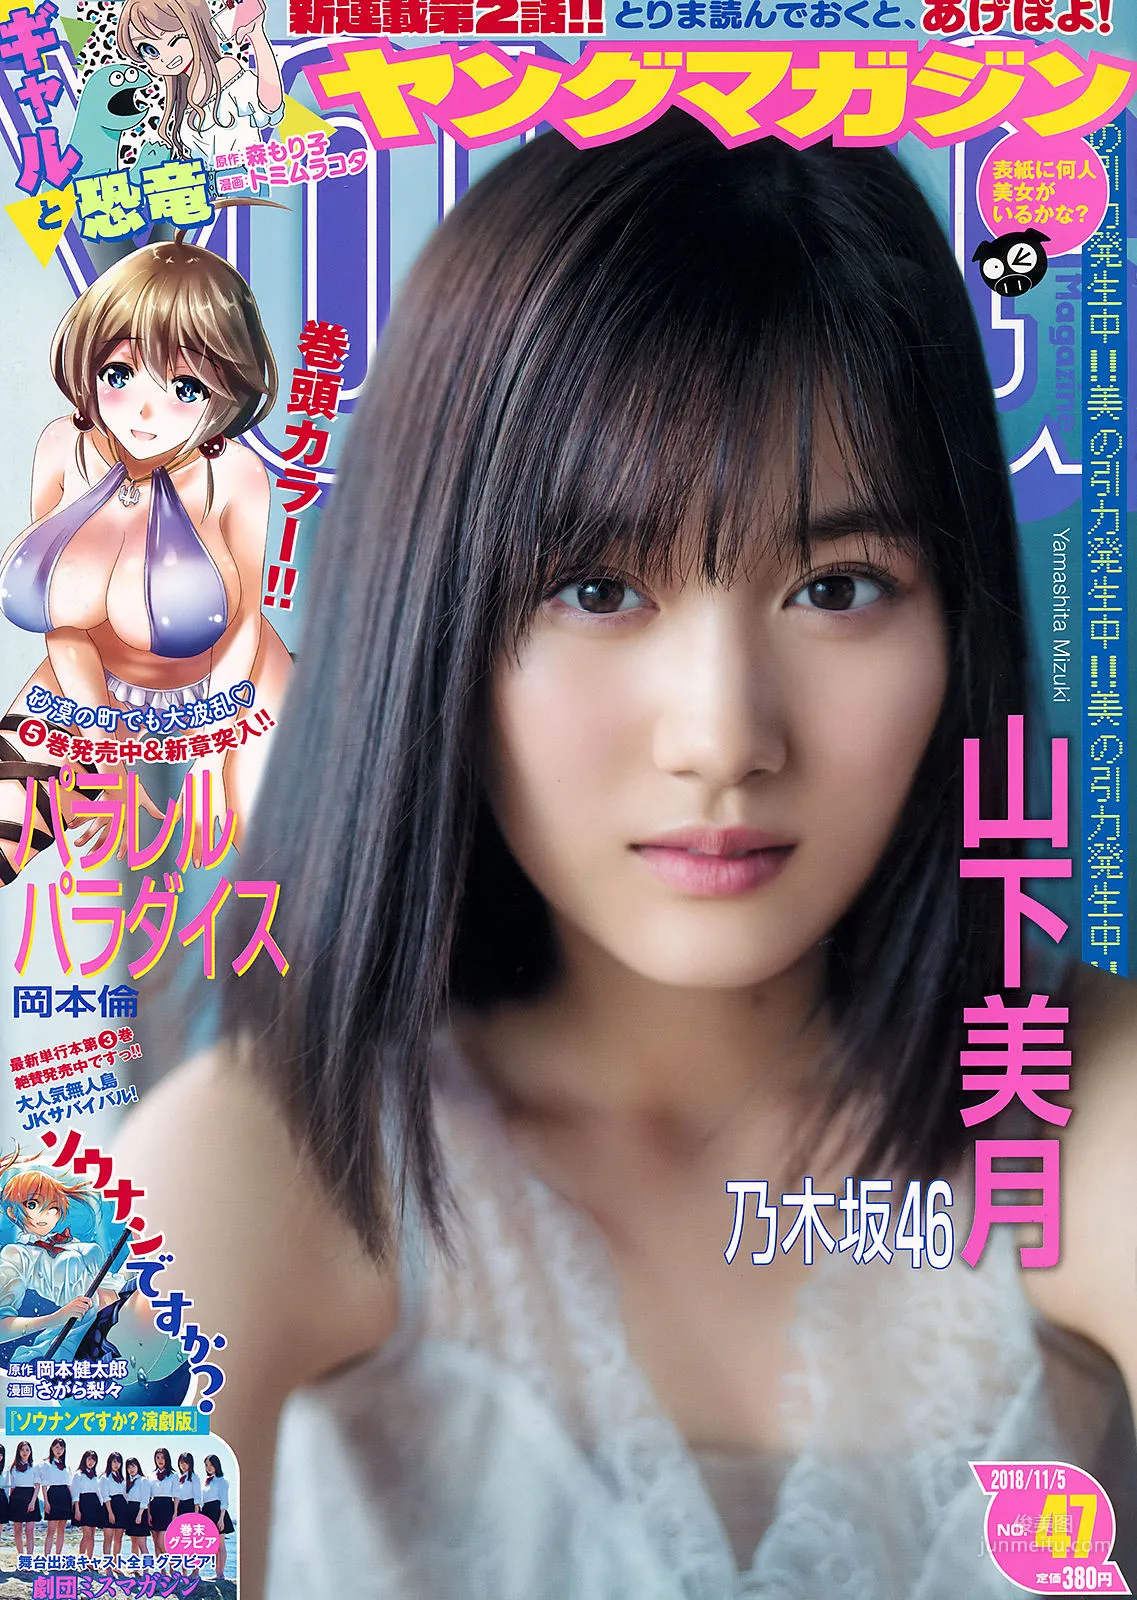 [Young Magazine] 山下美月 Mizuki Yamashita 2018年No.47 写真杂志1